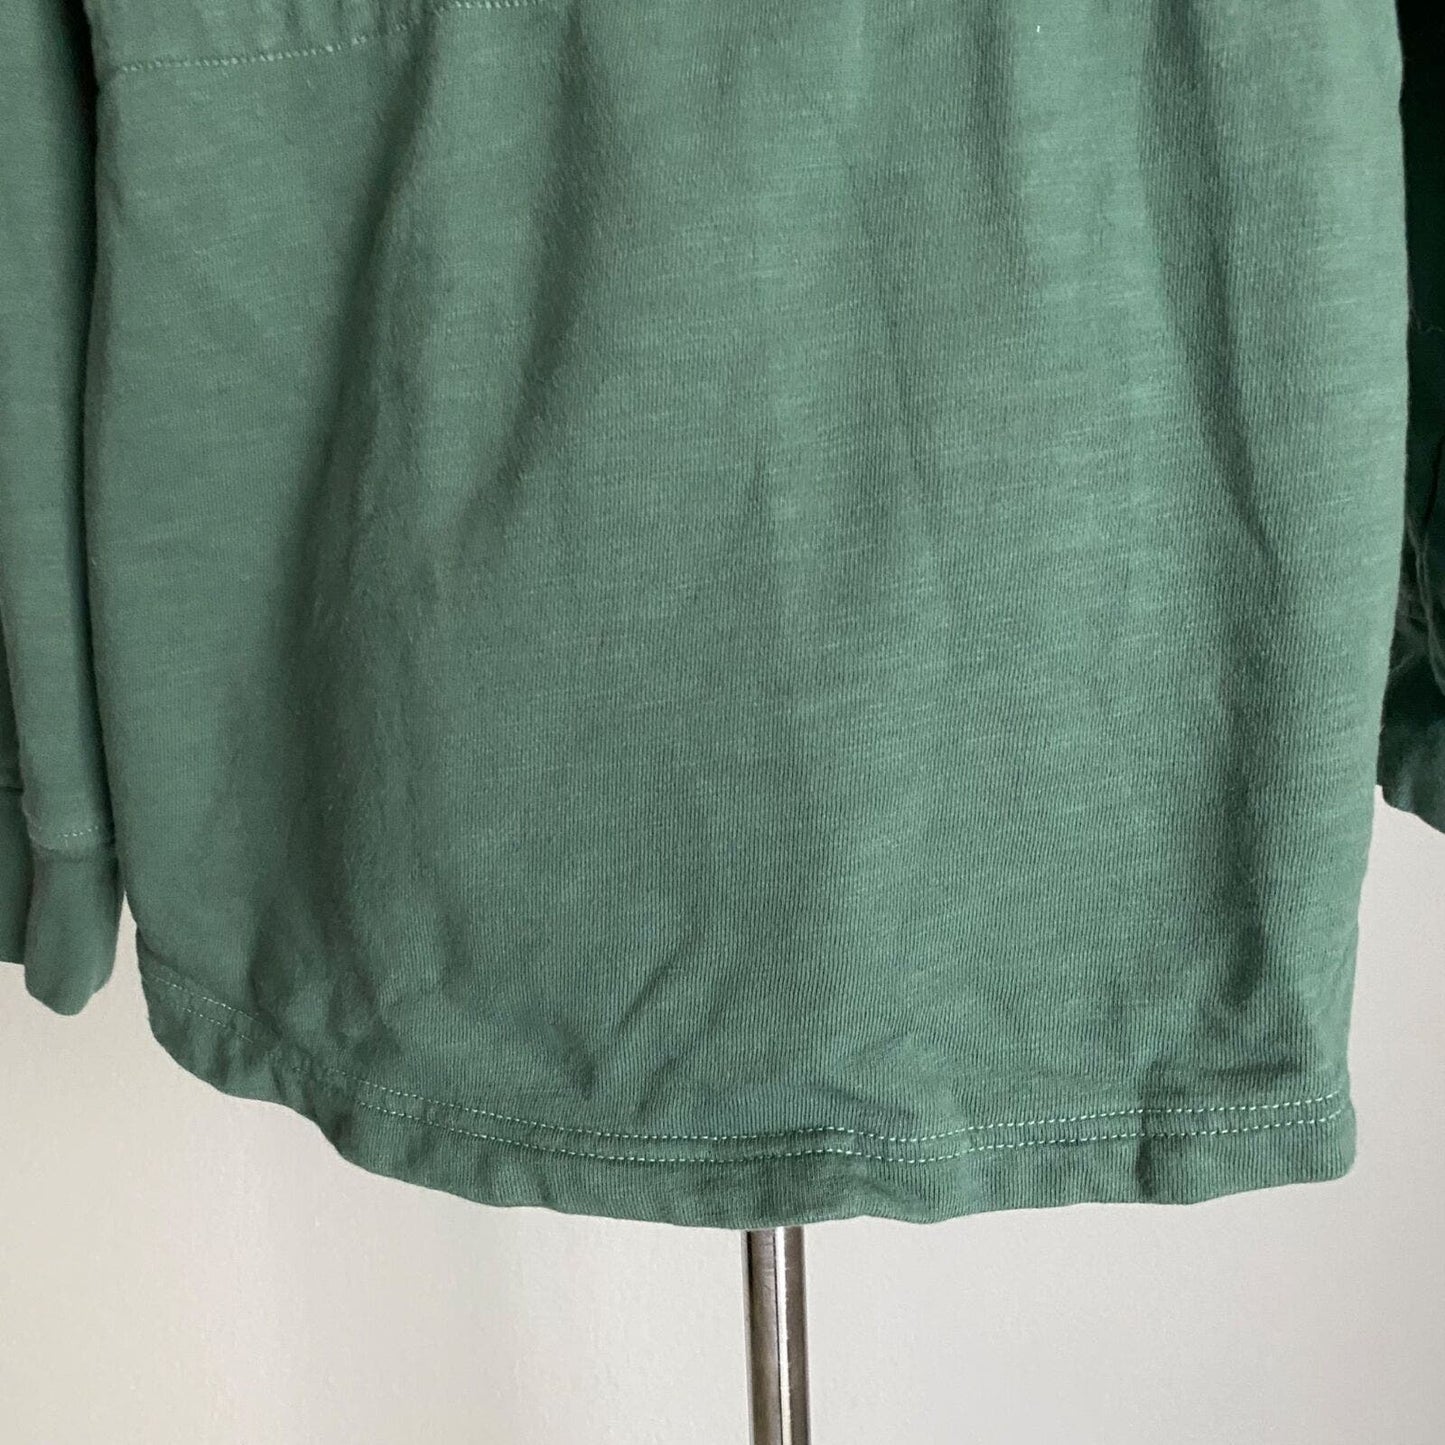 Gap sz S Cotton hooded zip sweat shirt draw string hoodie